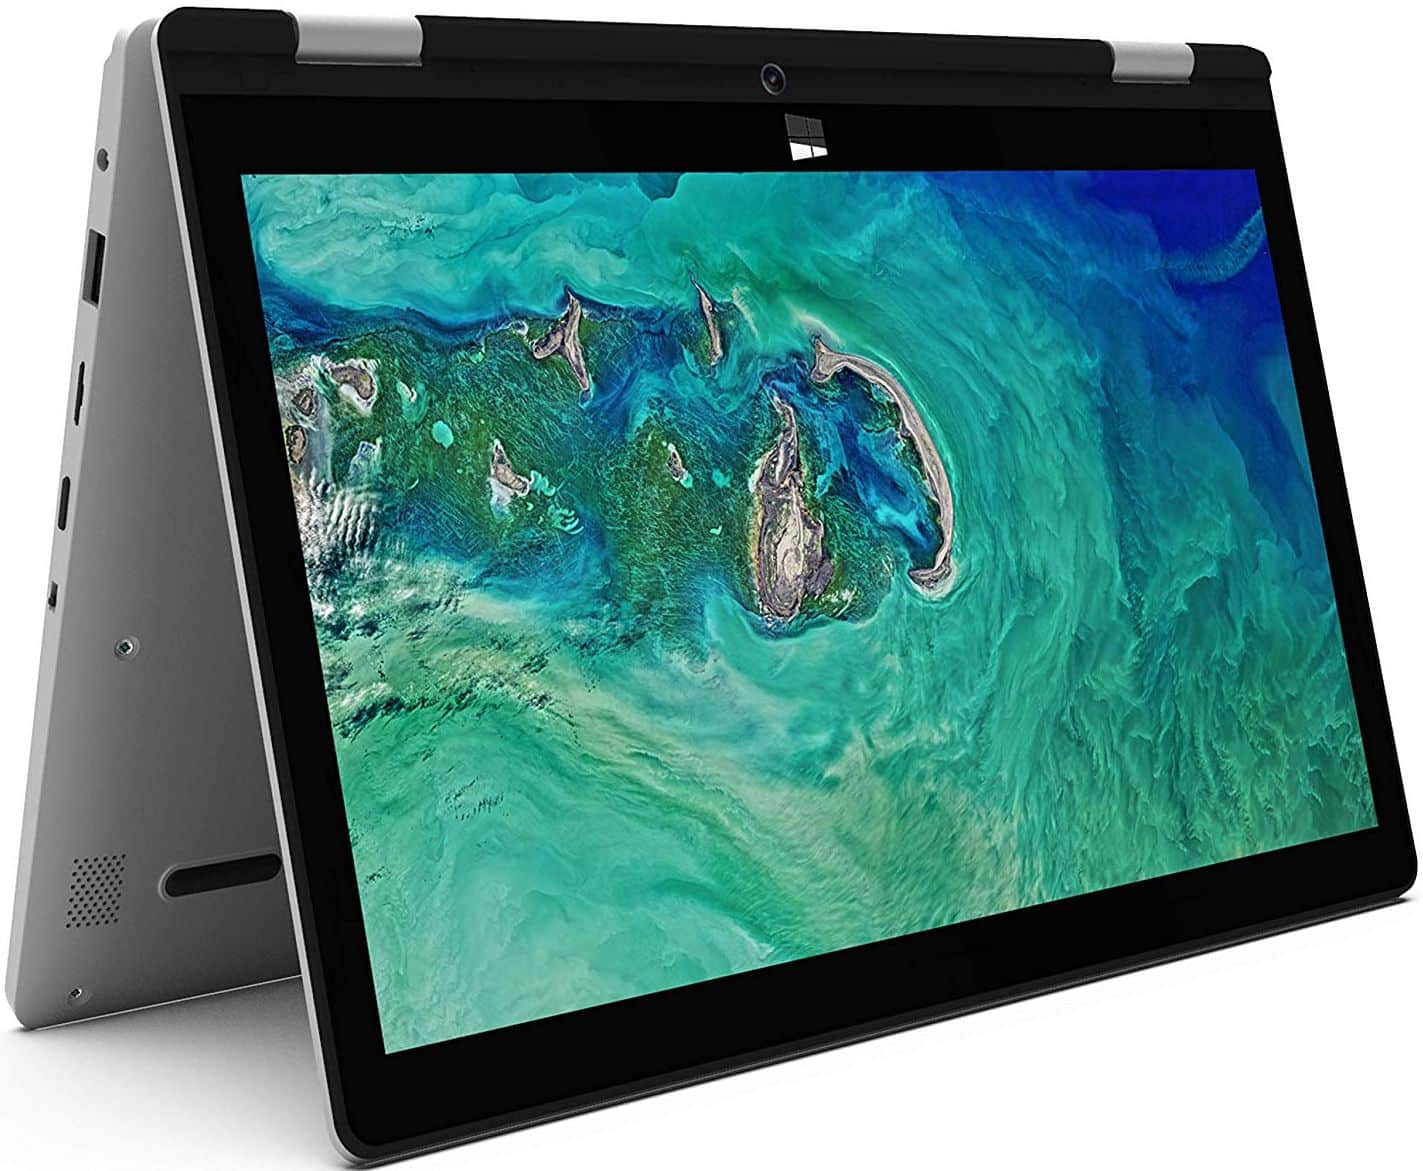 XIDU PhilBook Review: A Budget Touchscreen 2-in-1 Laptop